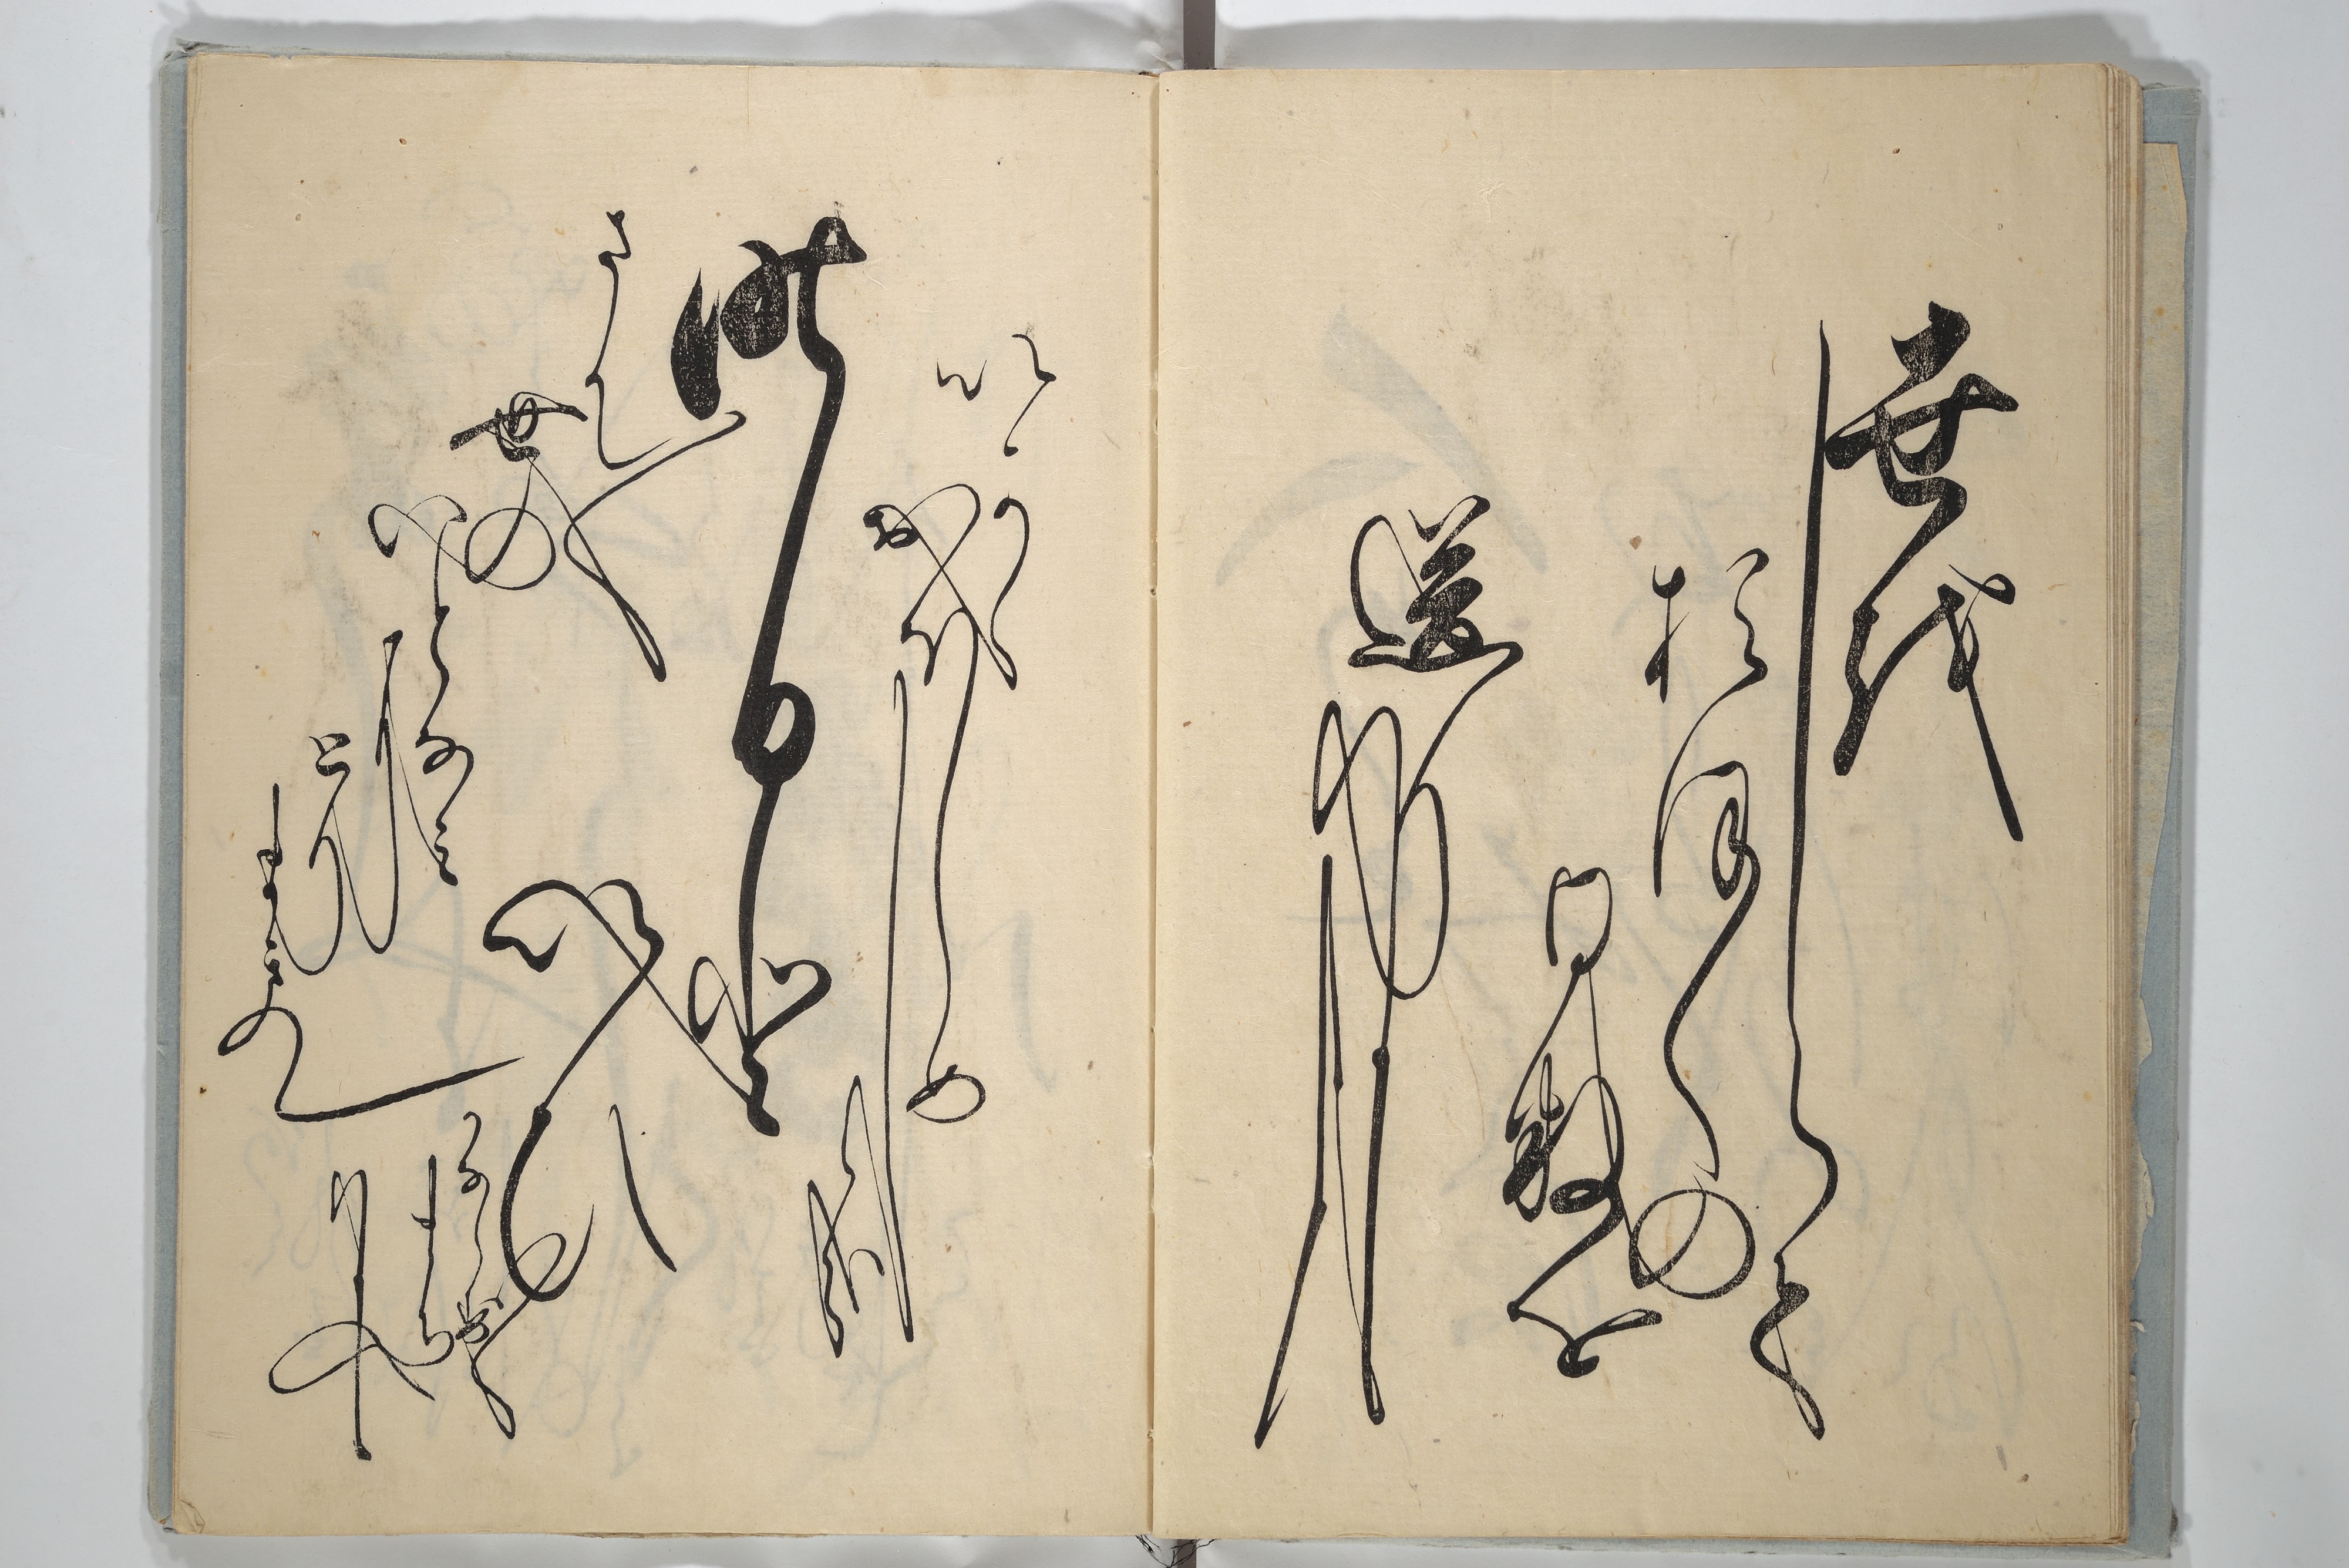 Hasegawa Myōtei 長谷川妙躰 | A Calligraphy Book (Nani wazu) 難波津 